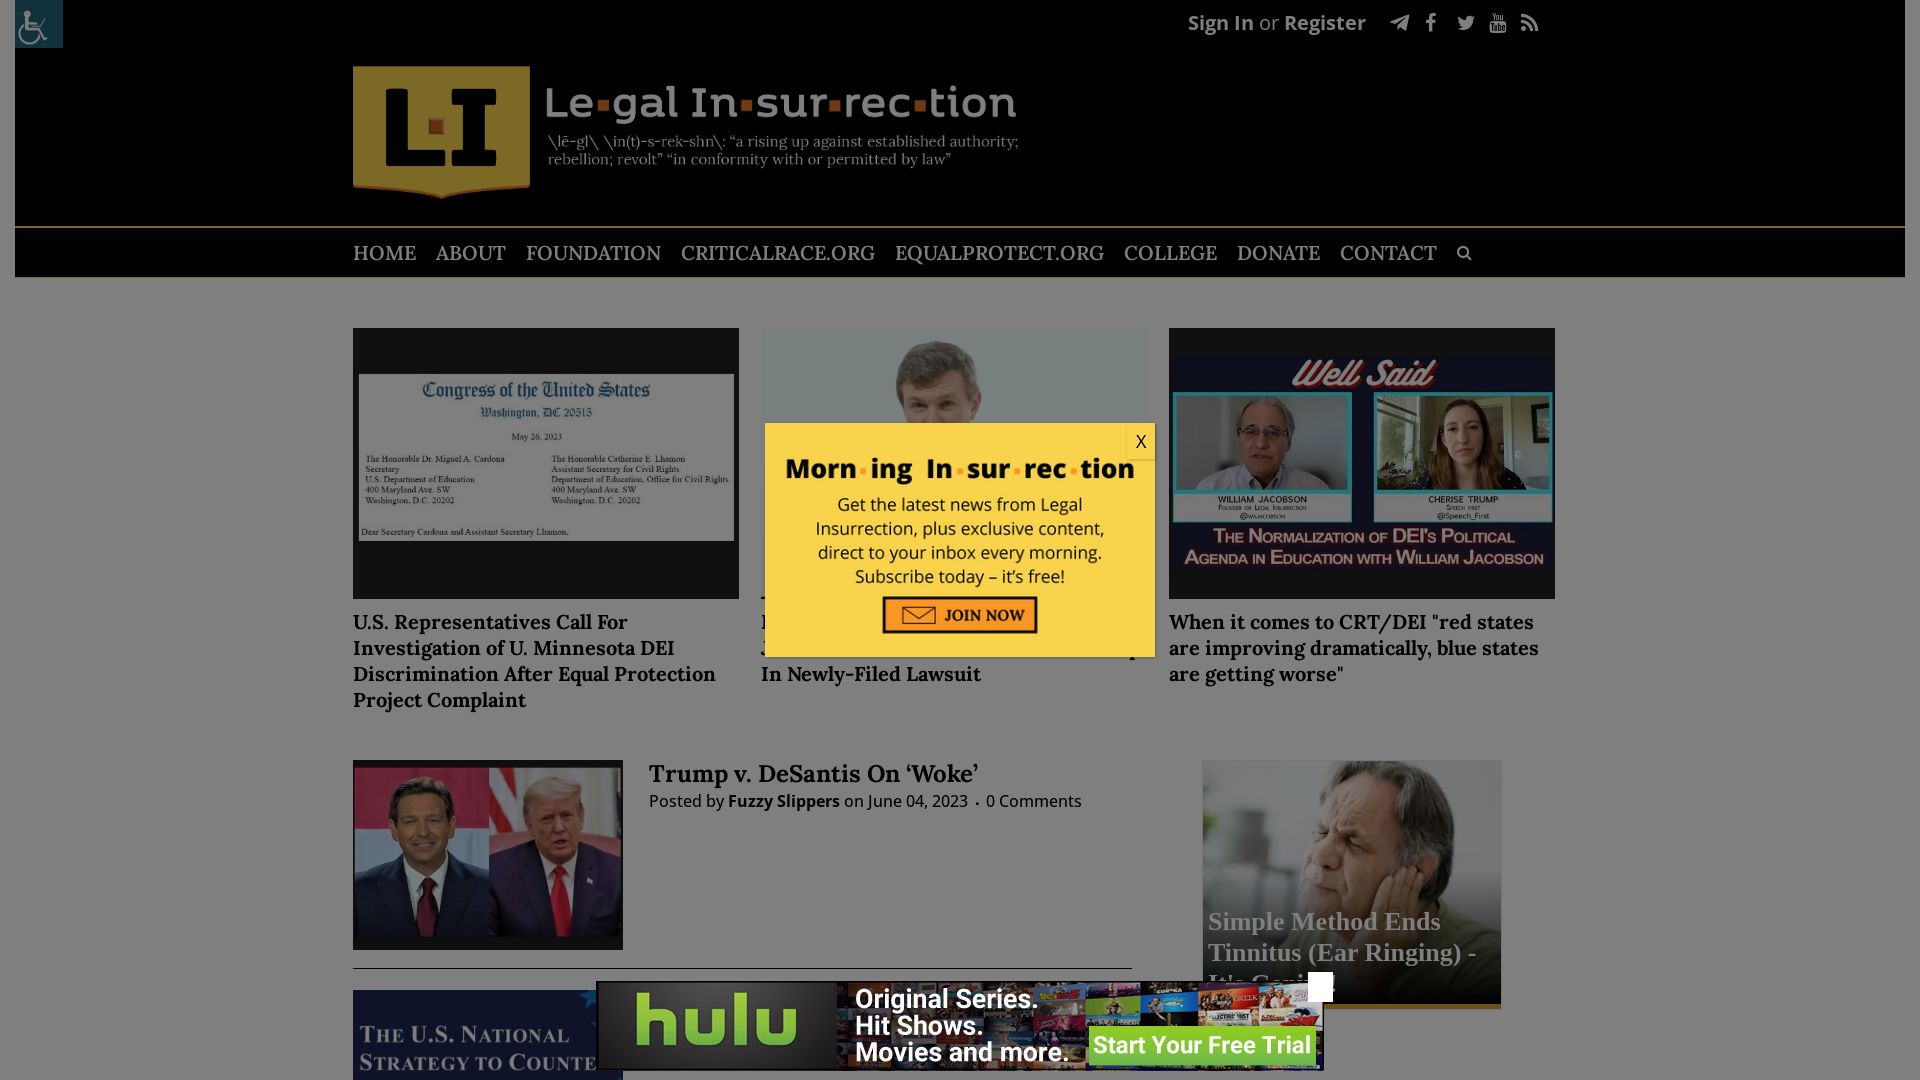 Website status legalinsurrection.com is   ONLINE